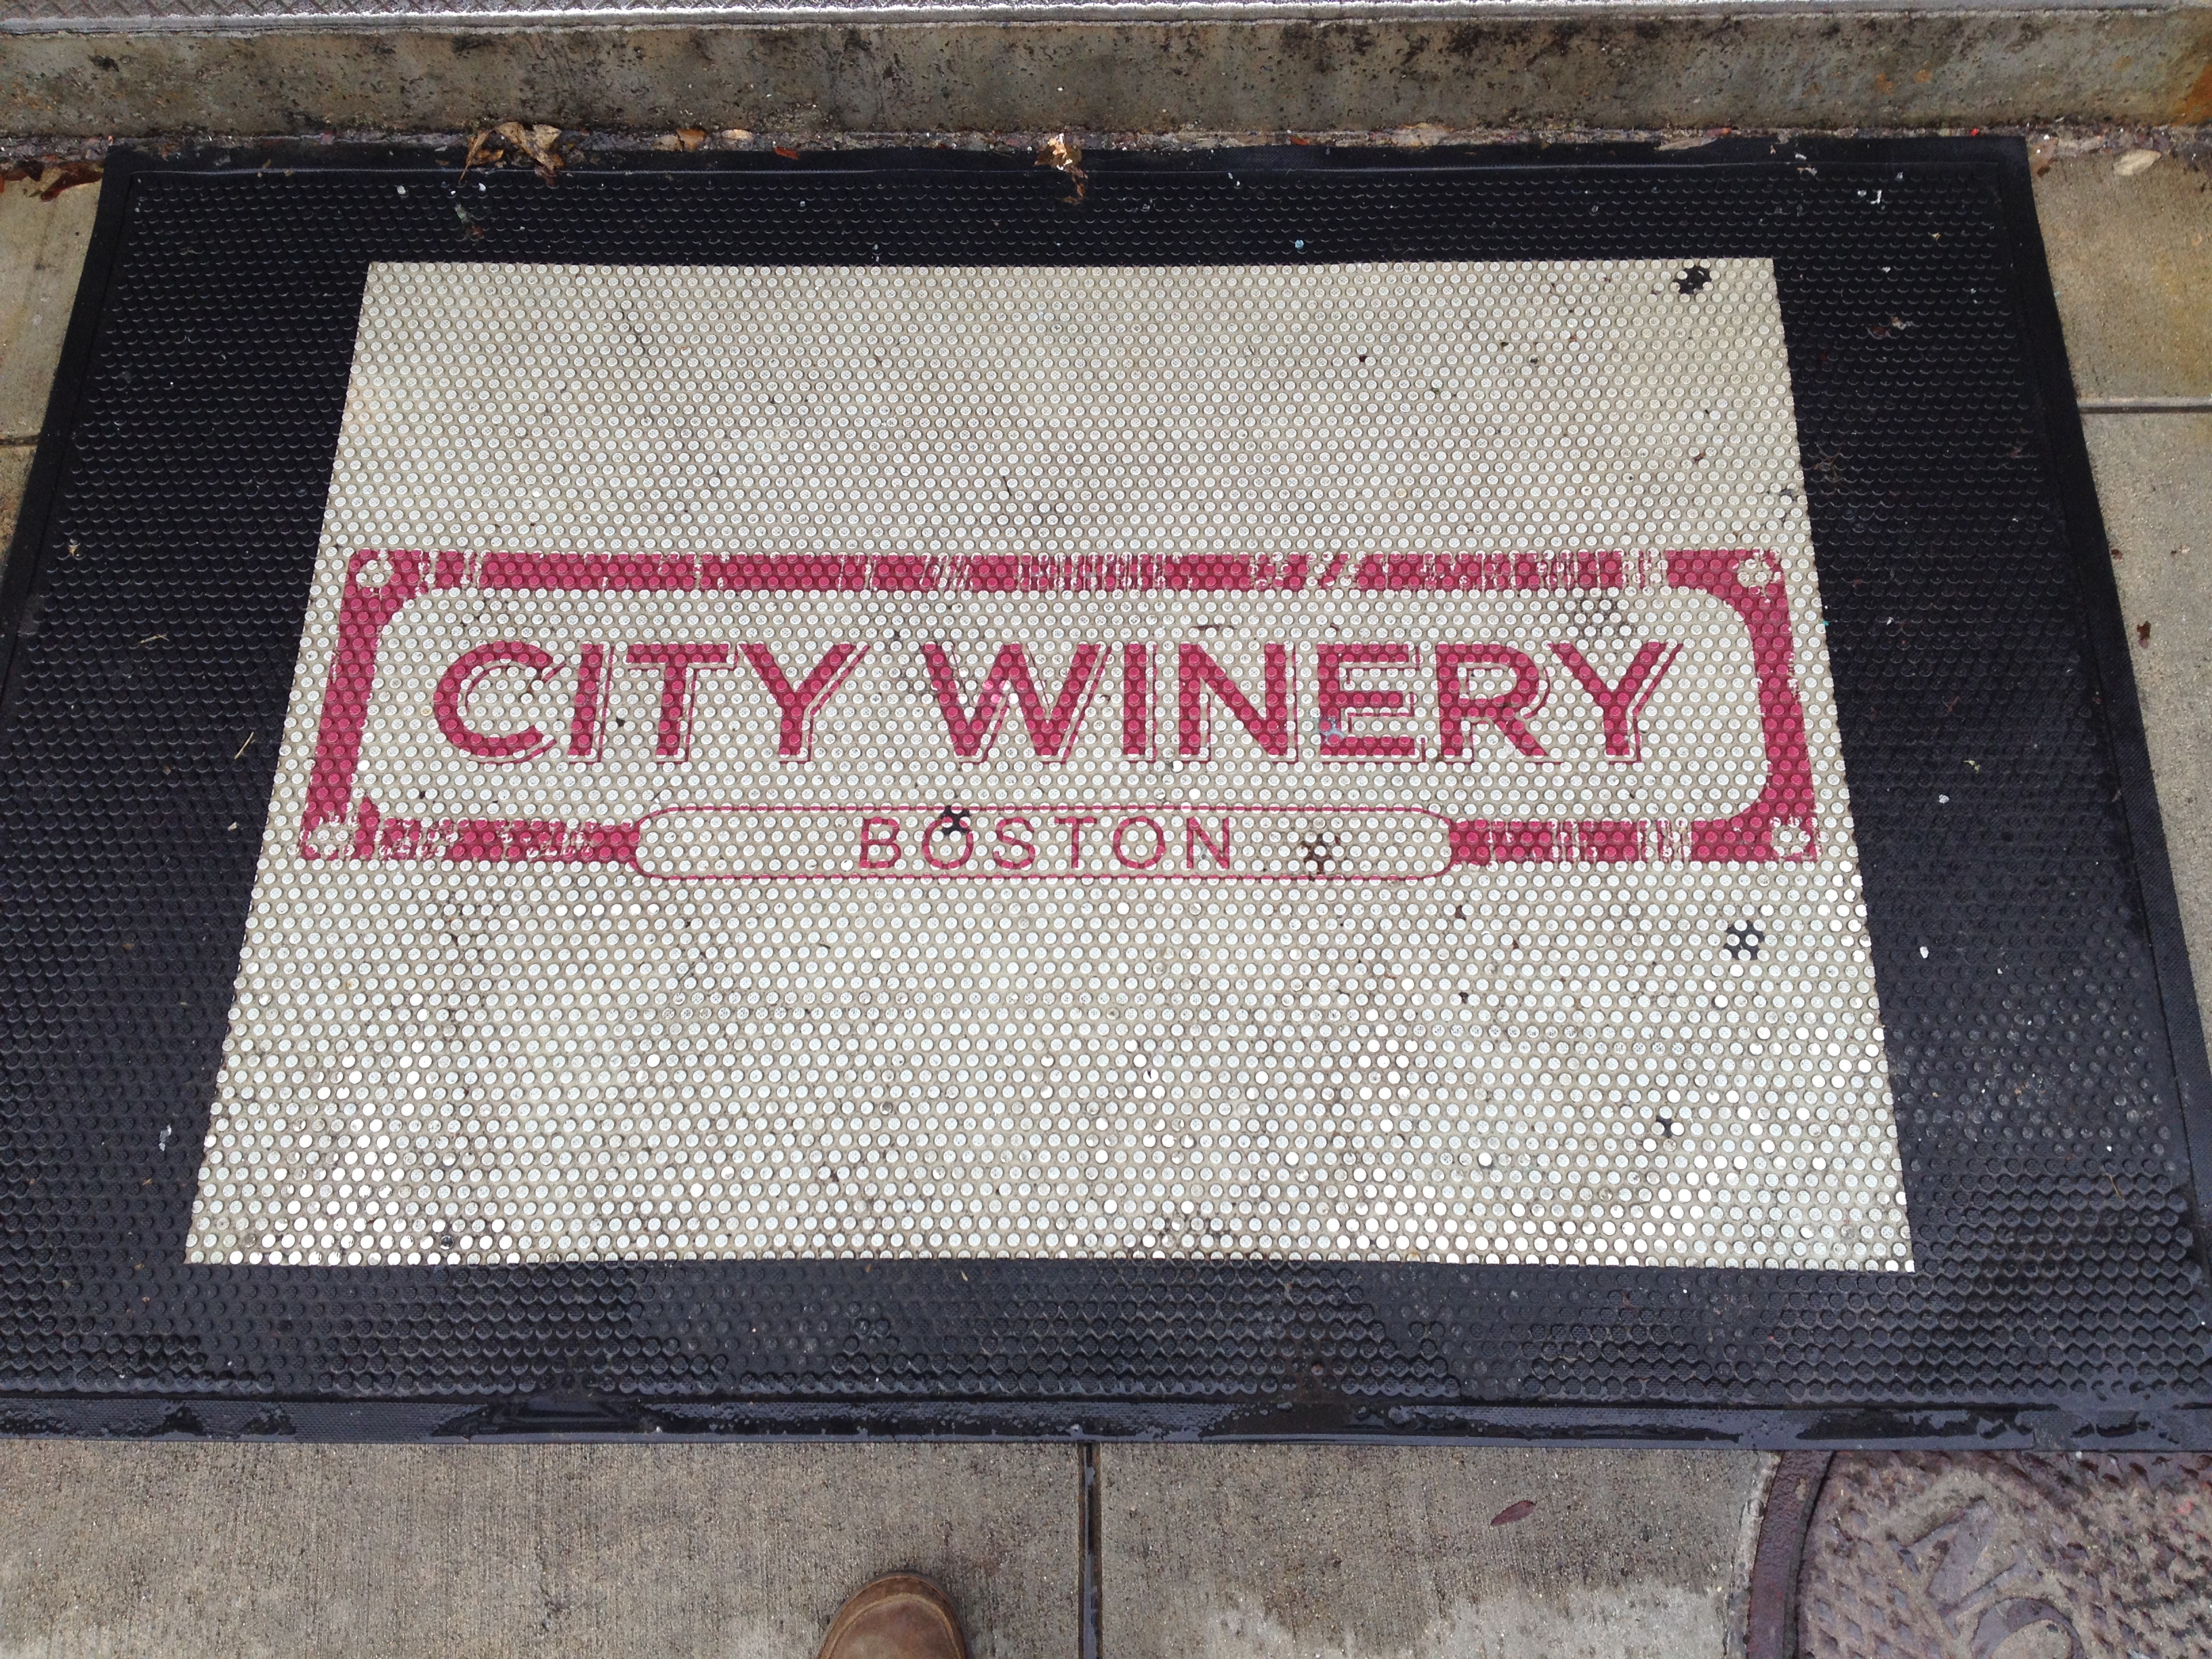 Welcom to City Winery Mat